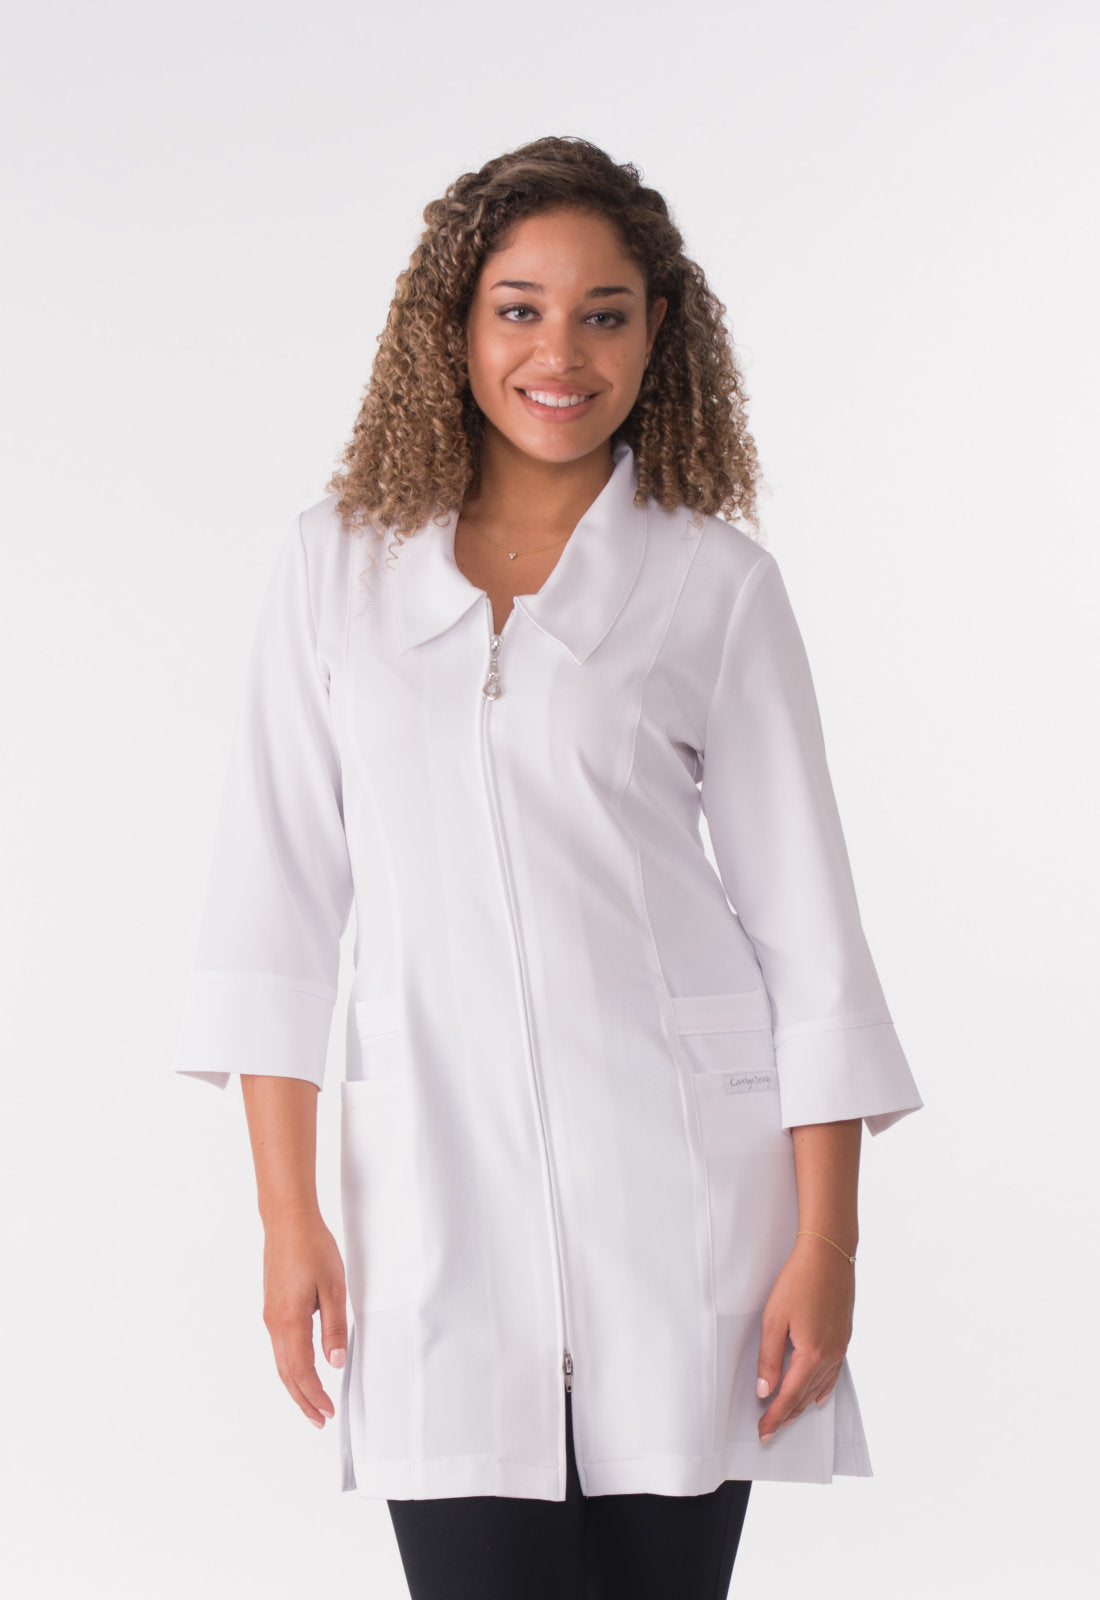 Women's Lab Coat Overwhelming Carolyn Design #61938